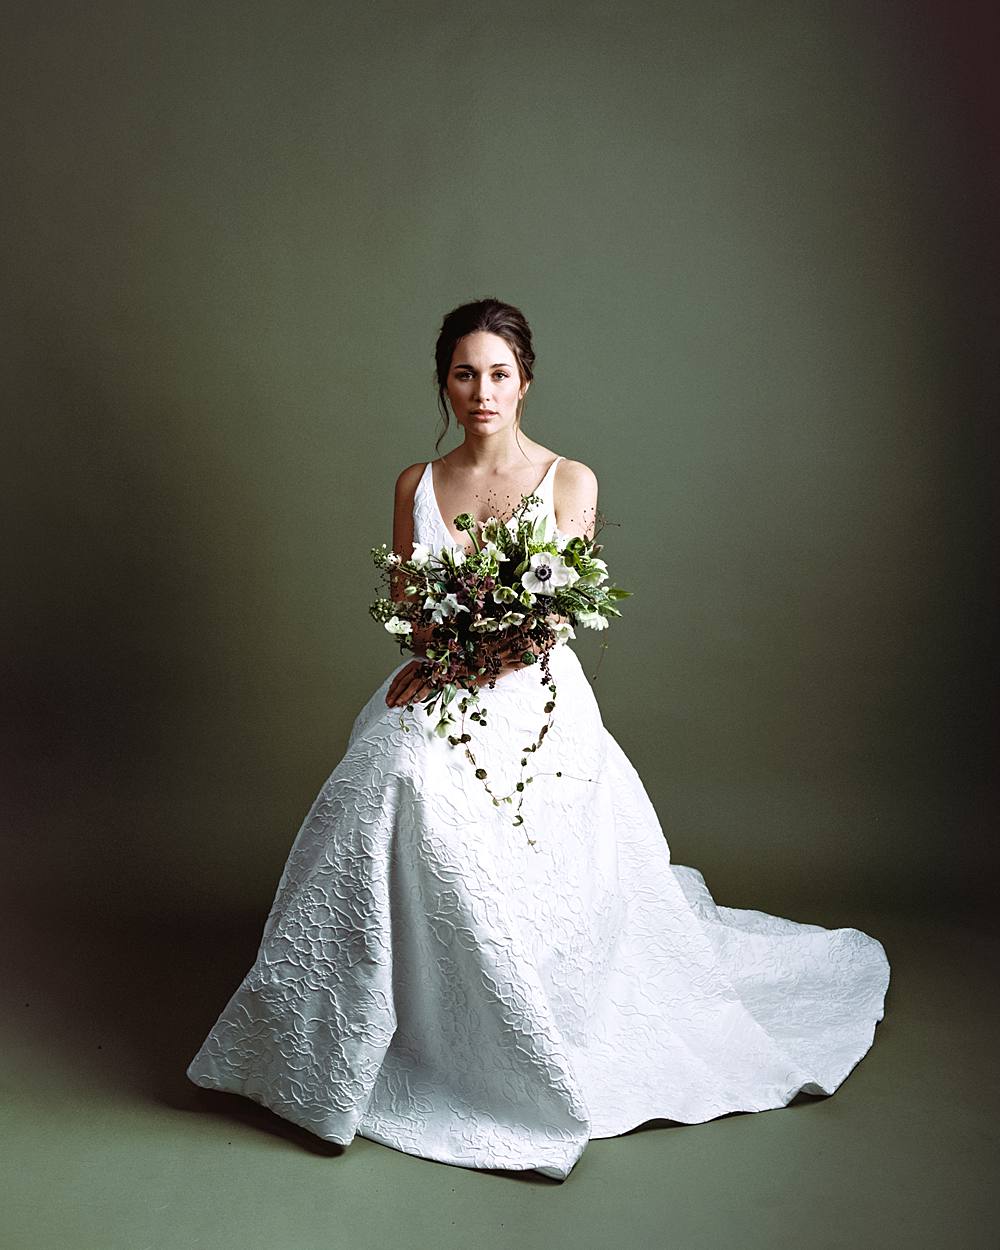 2002 charleston studio bridal portrait green seamless florals kodak portra 160 film strobes 00014_web